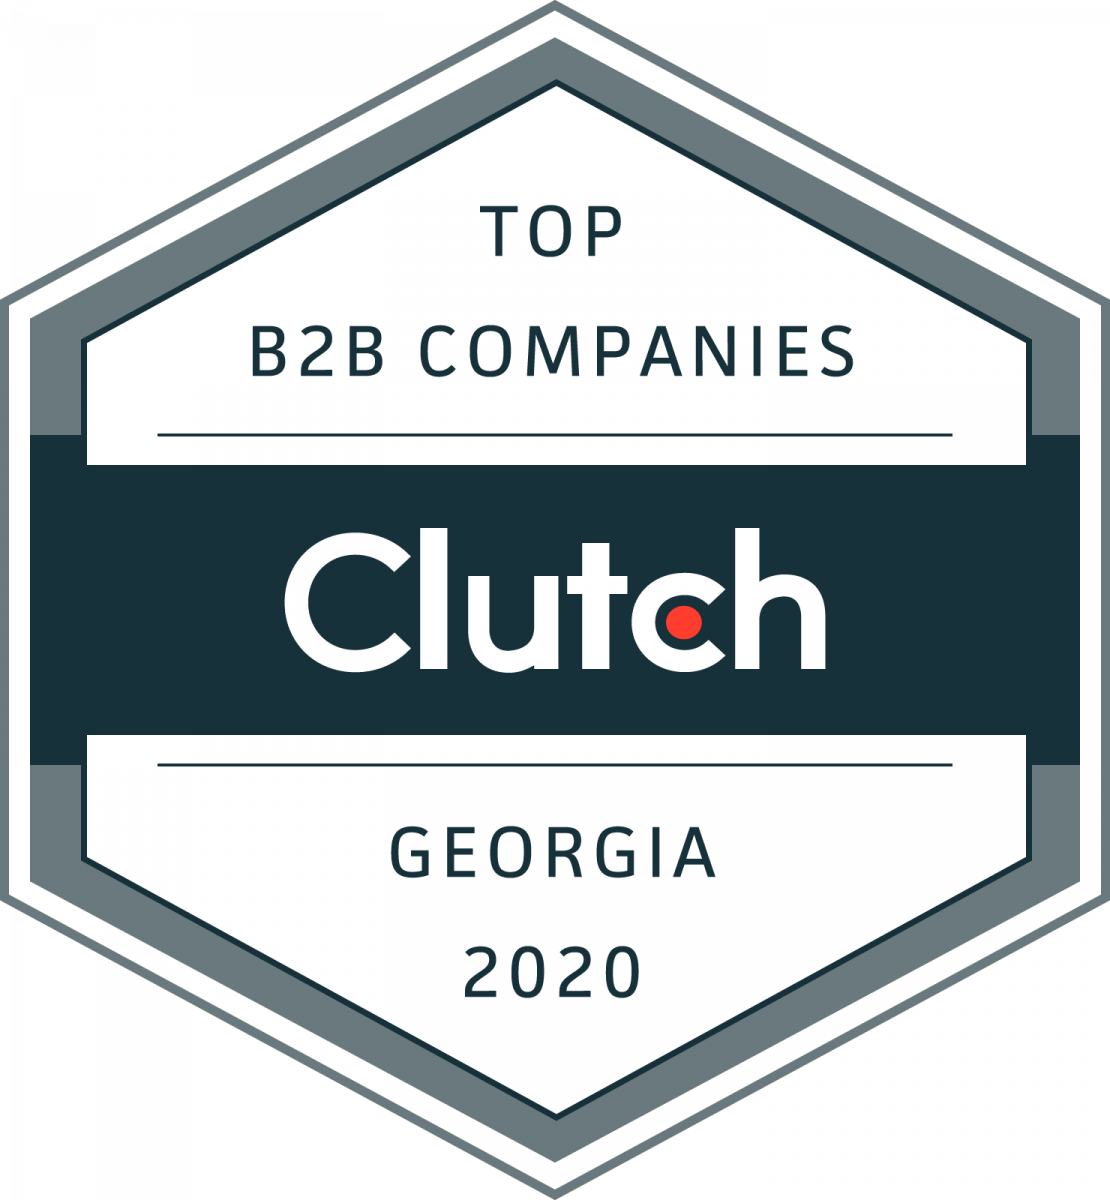 Top B2B Companies Georgia 2020